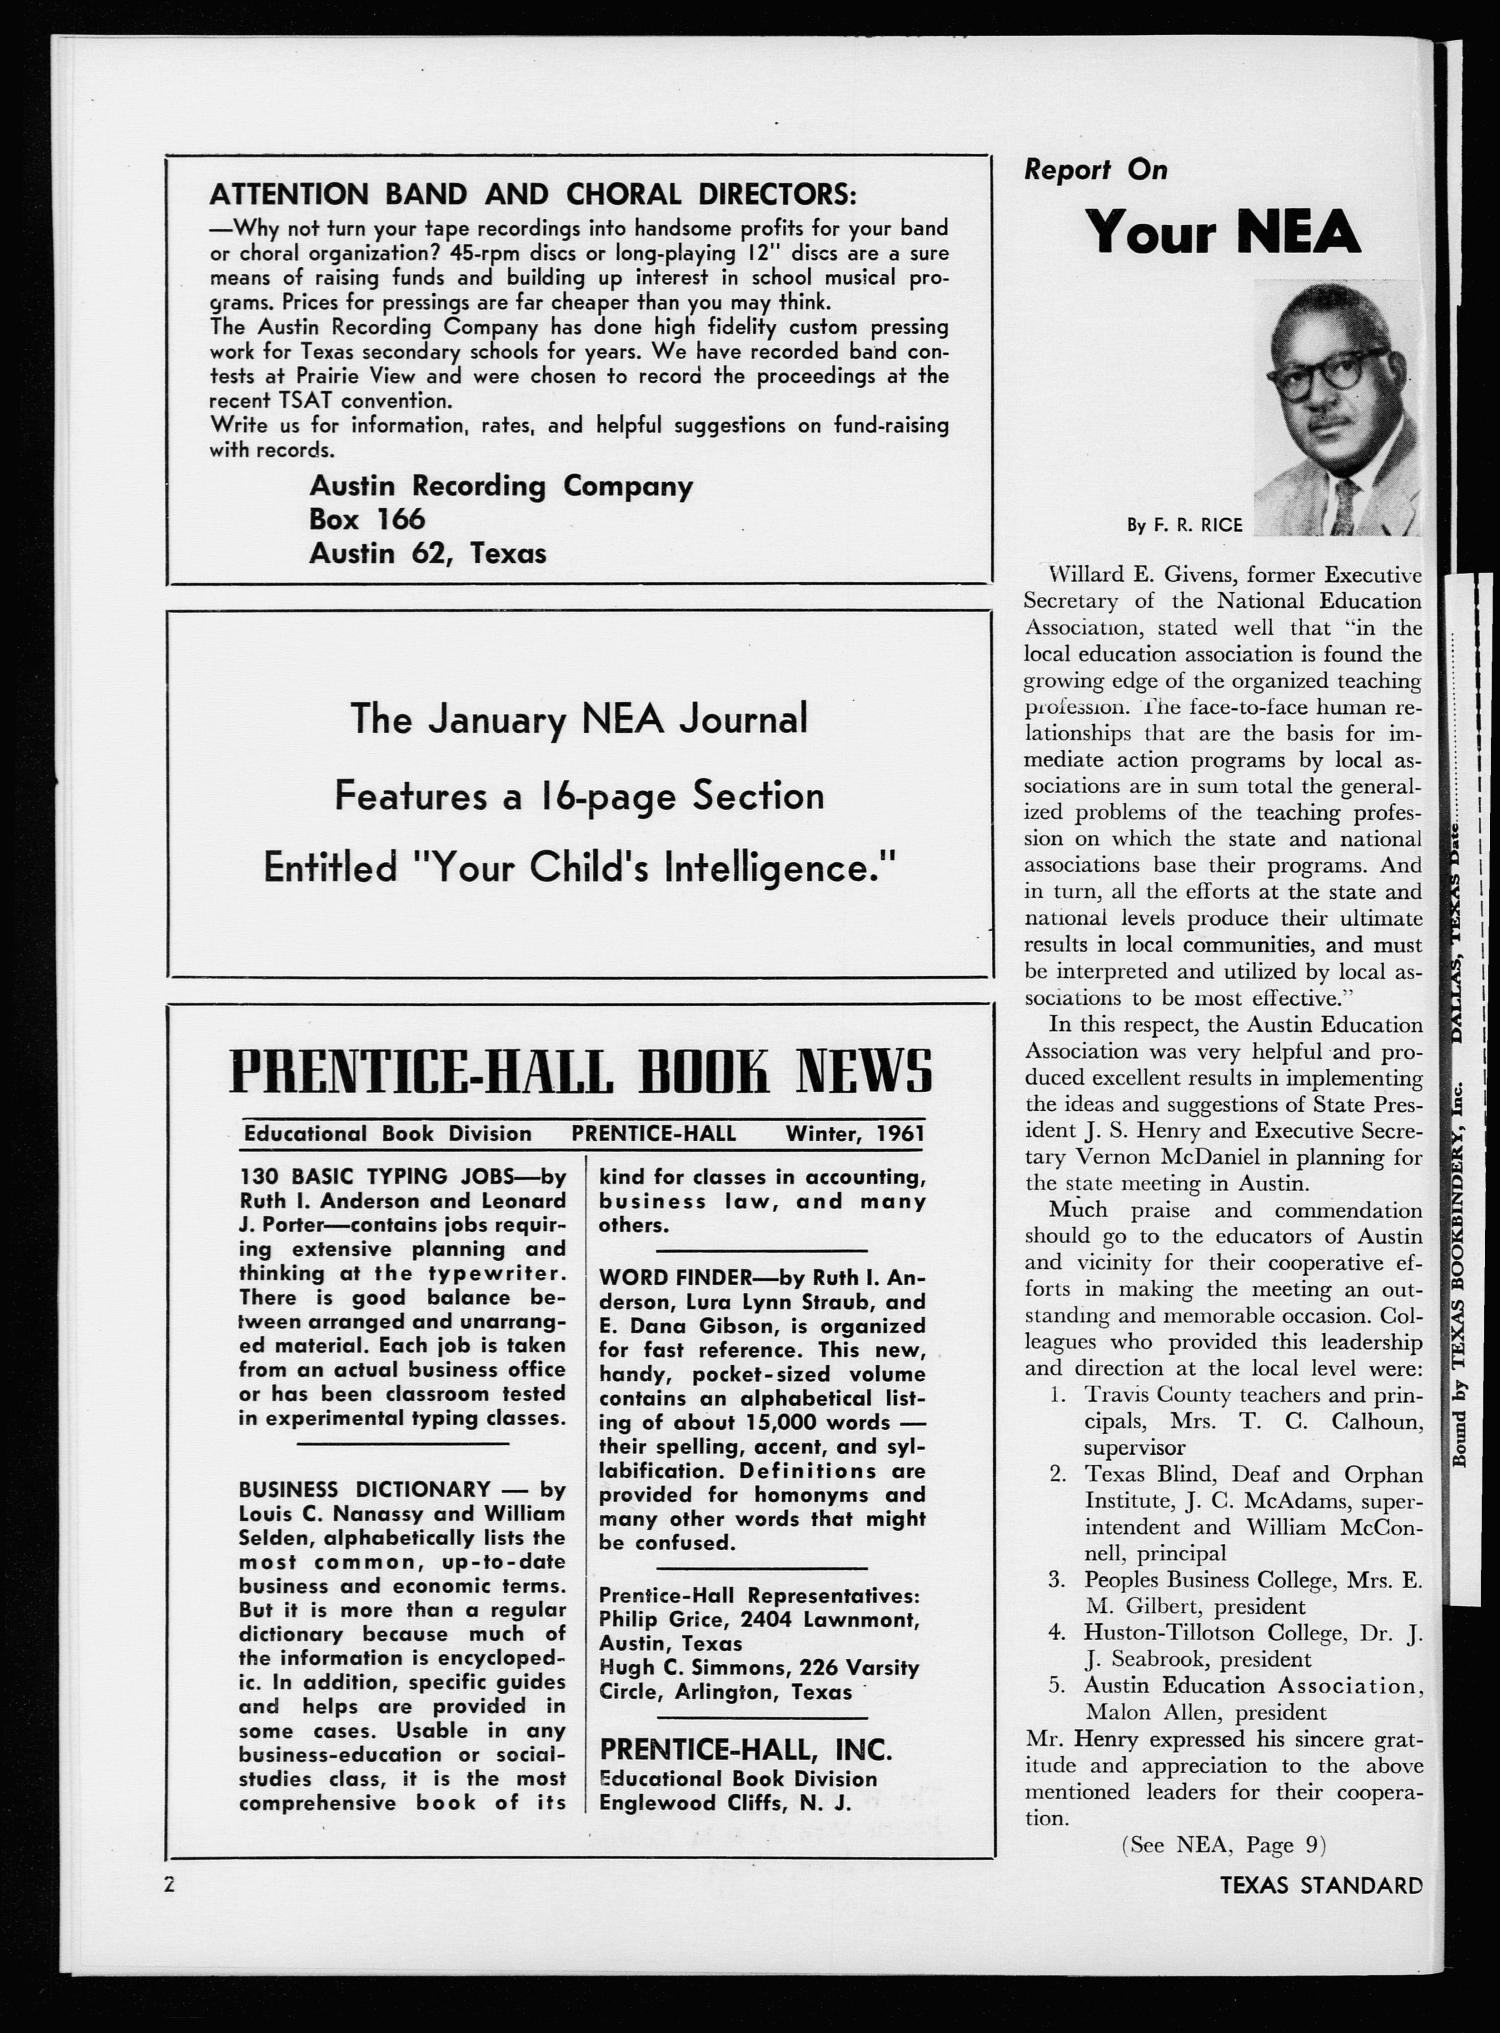 The Texas Standard, Volume 35, Number 1, January-February 1961
                                                
                                                    2
                                                